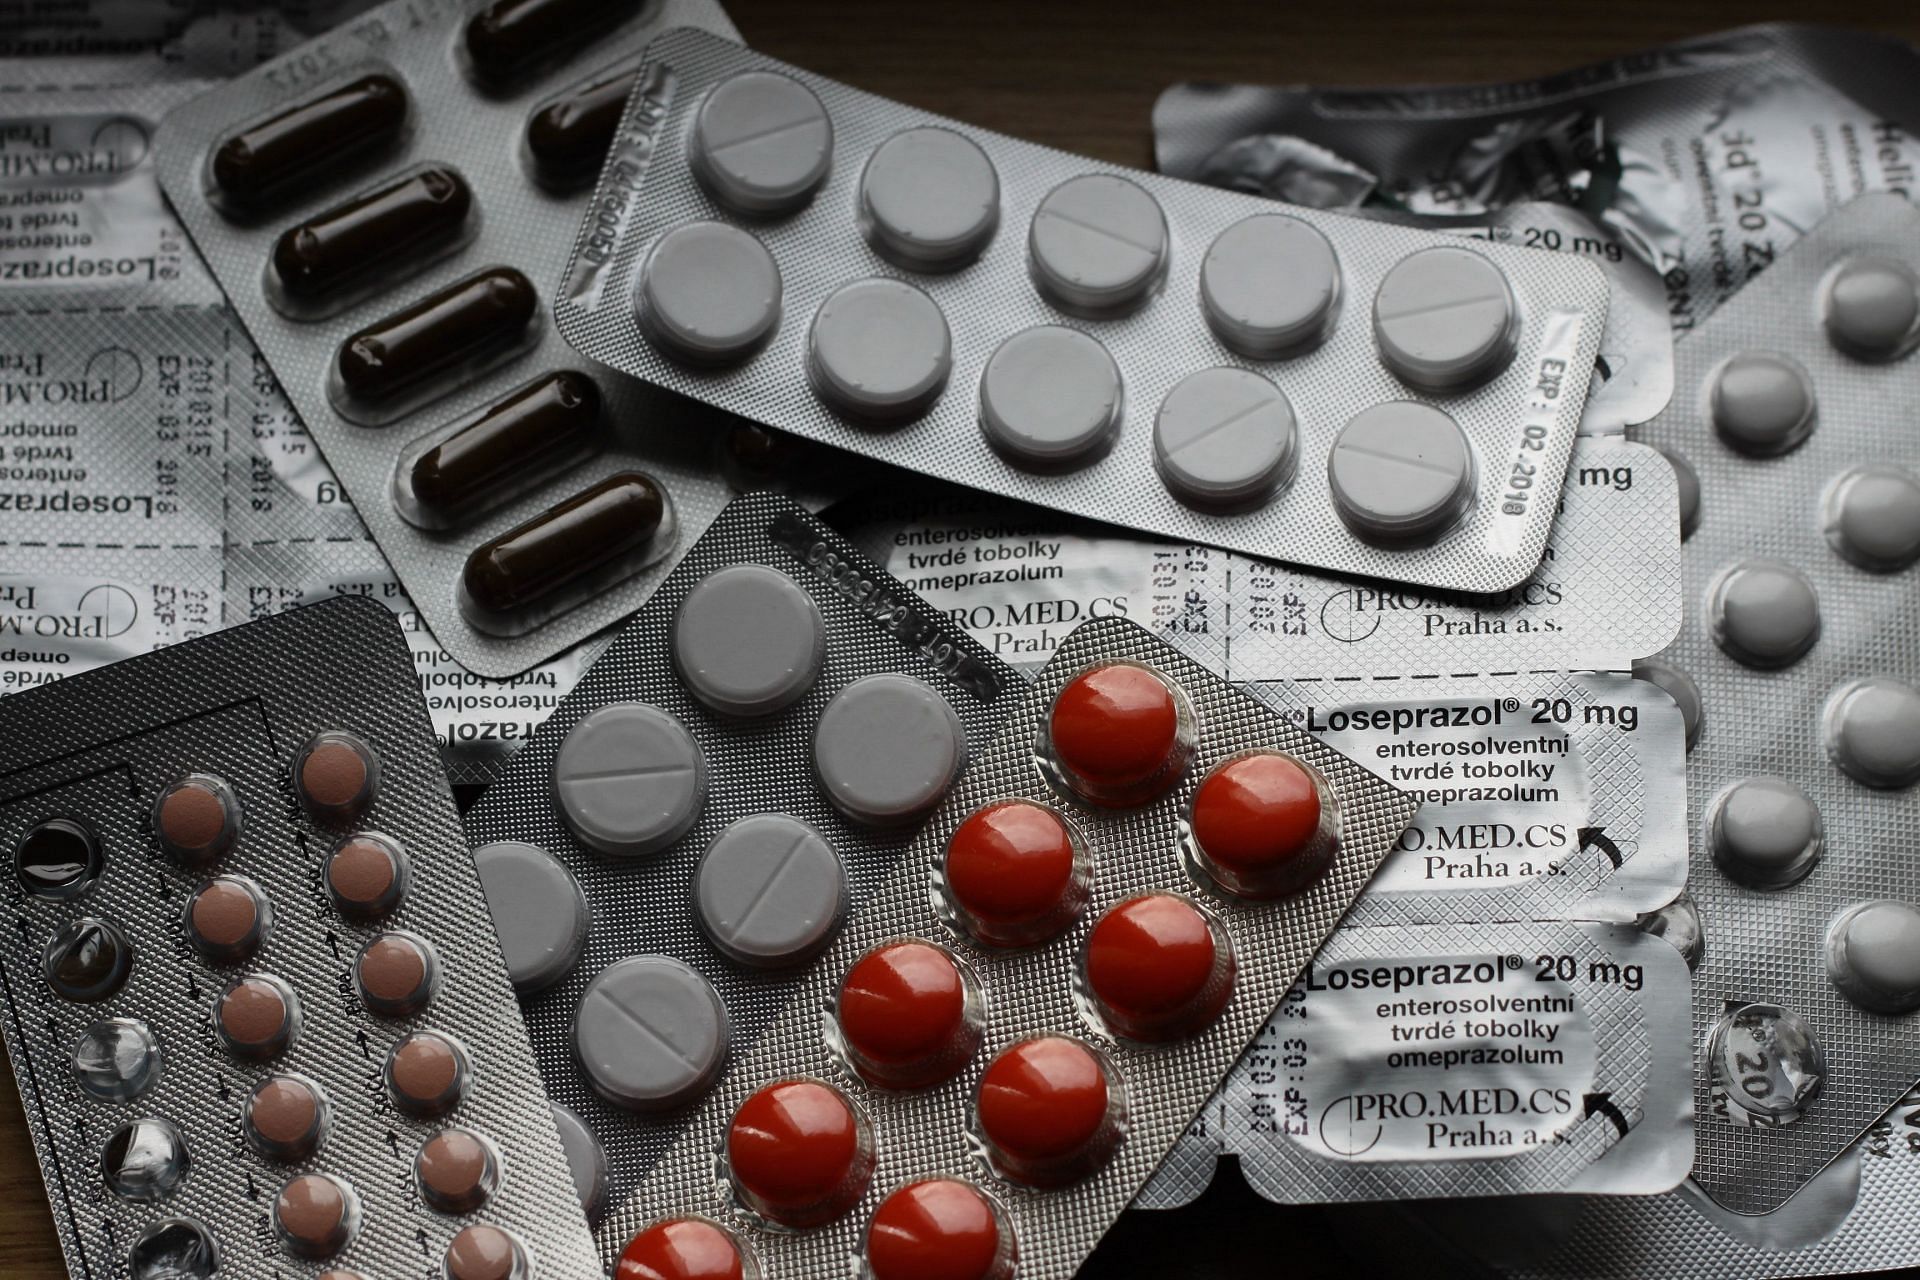 Medication is an important component of treatment for melancholic depression. (Image via Pexels/Pixabay)